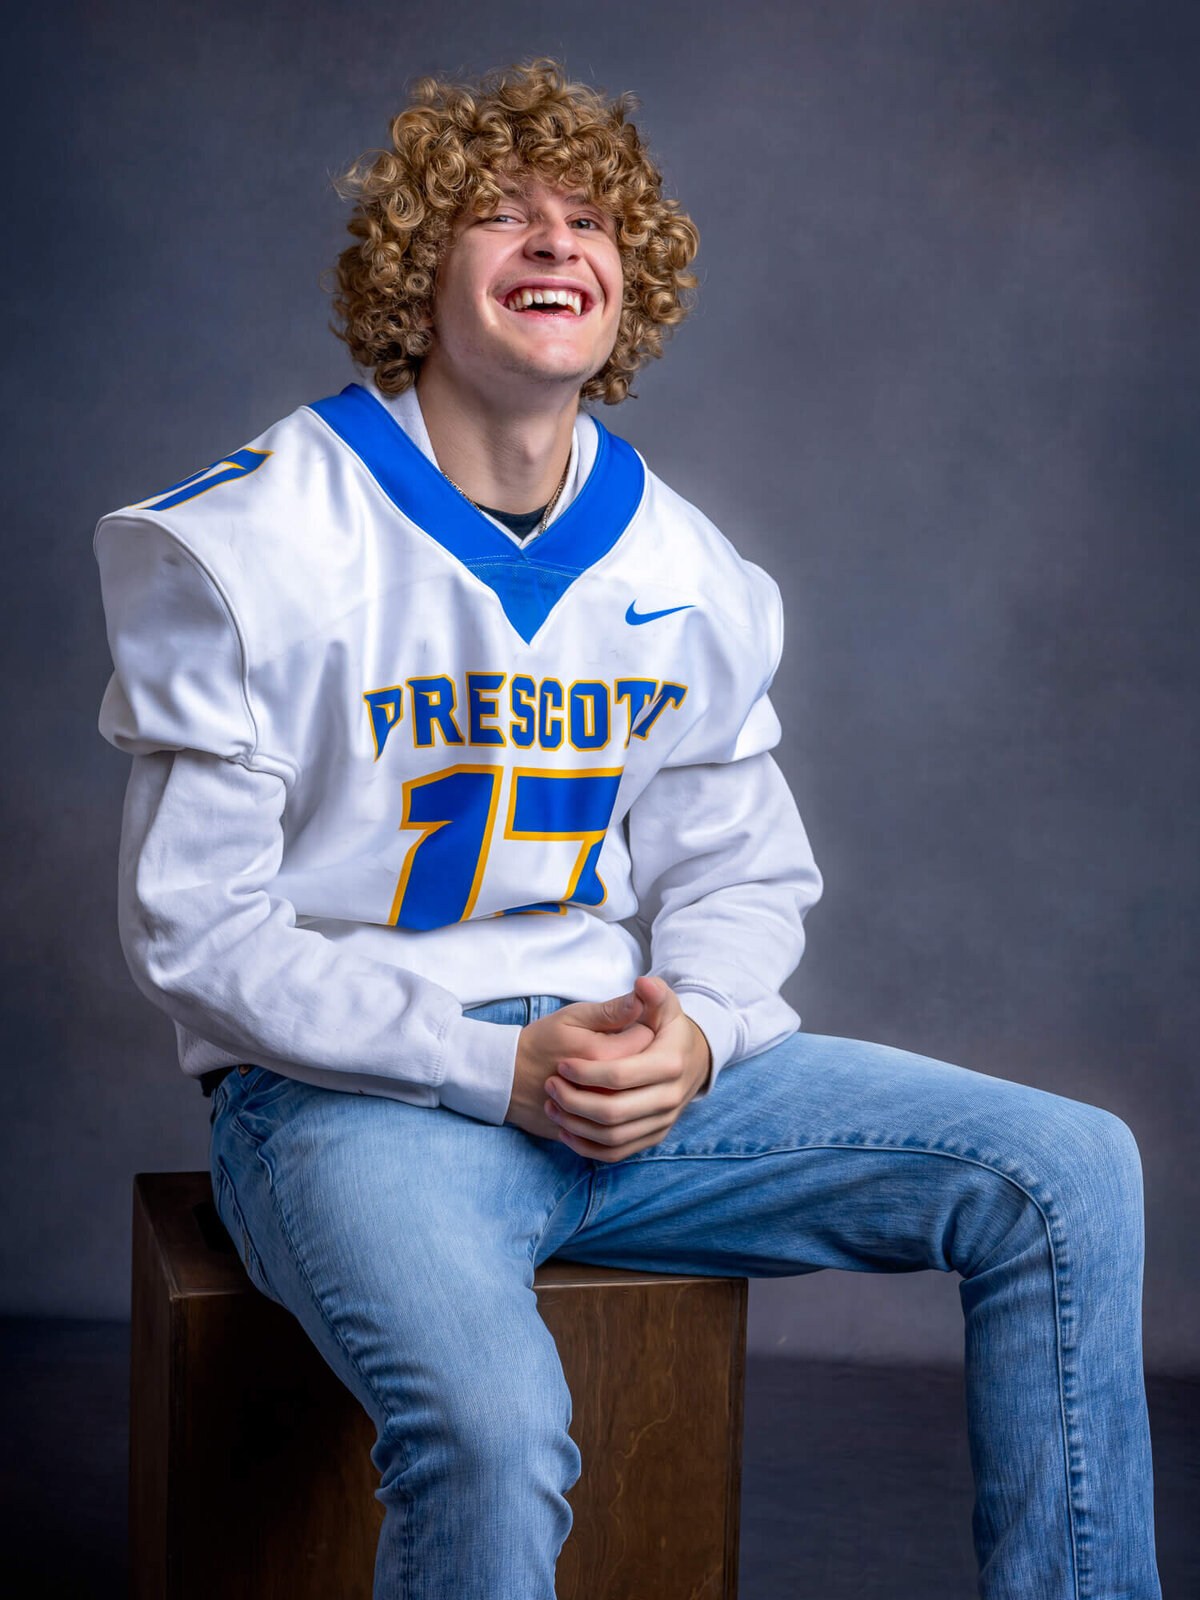 Prescott High School football player laughs in photos with Prescott senior photographer Melissa Byrne